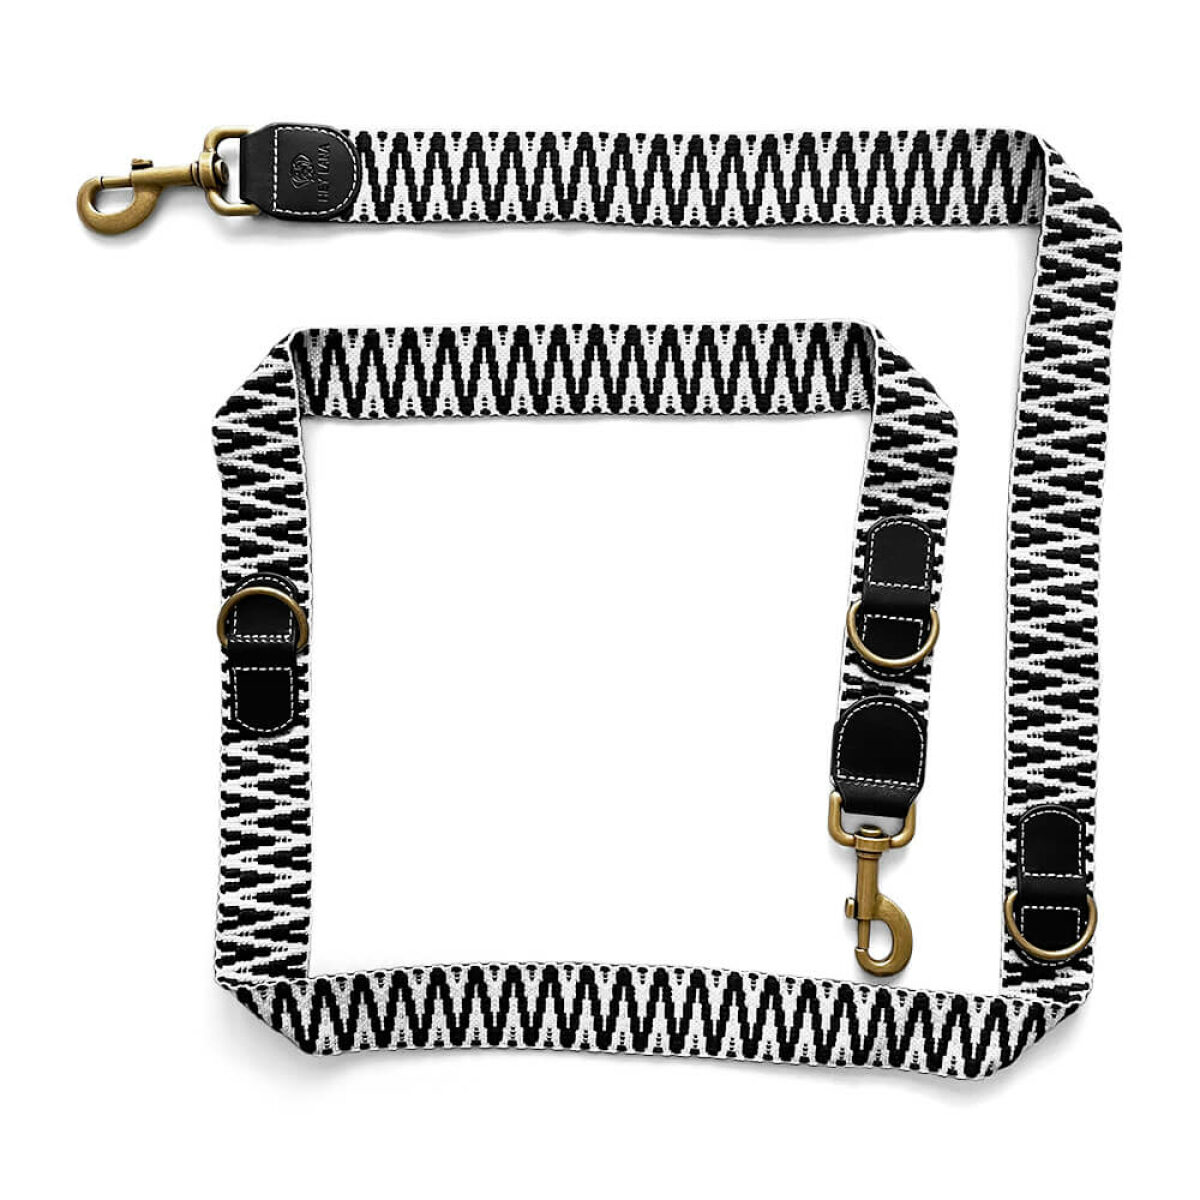 Long premium dog lead is 3-way adjustable 1.80m in black/white